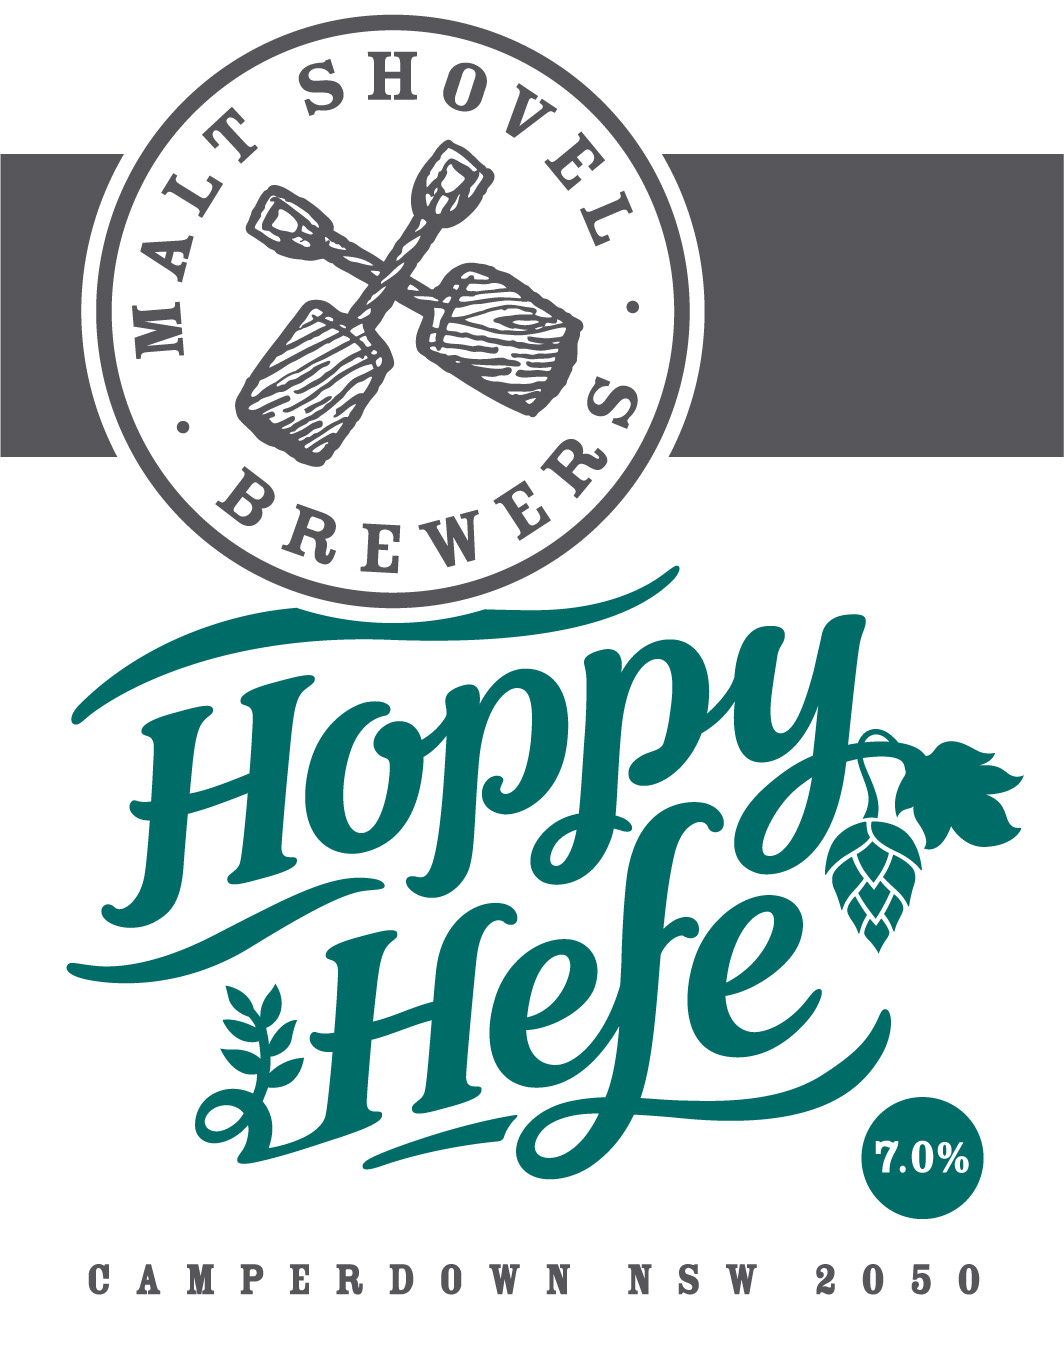 First release: Hoppy Hefe